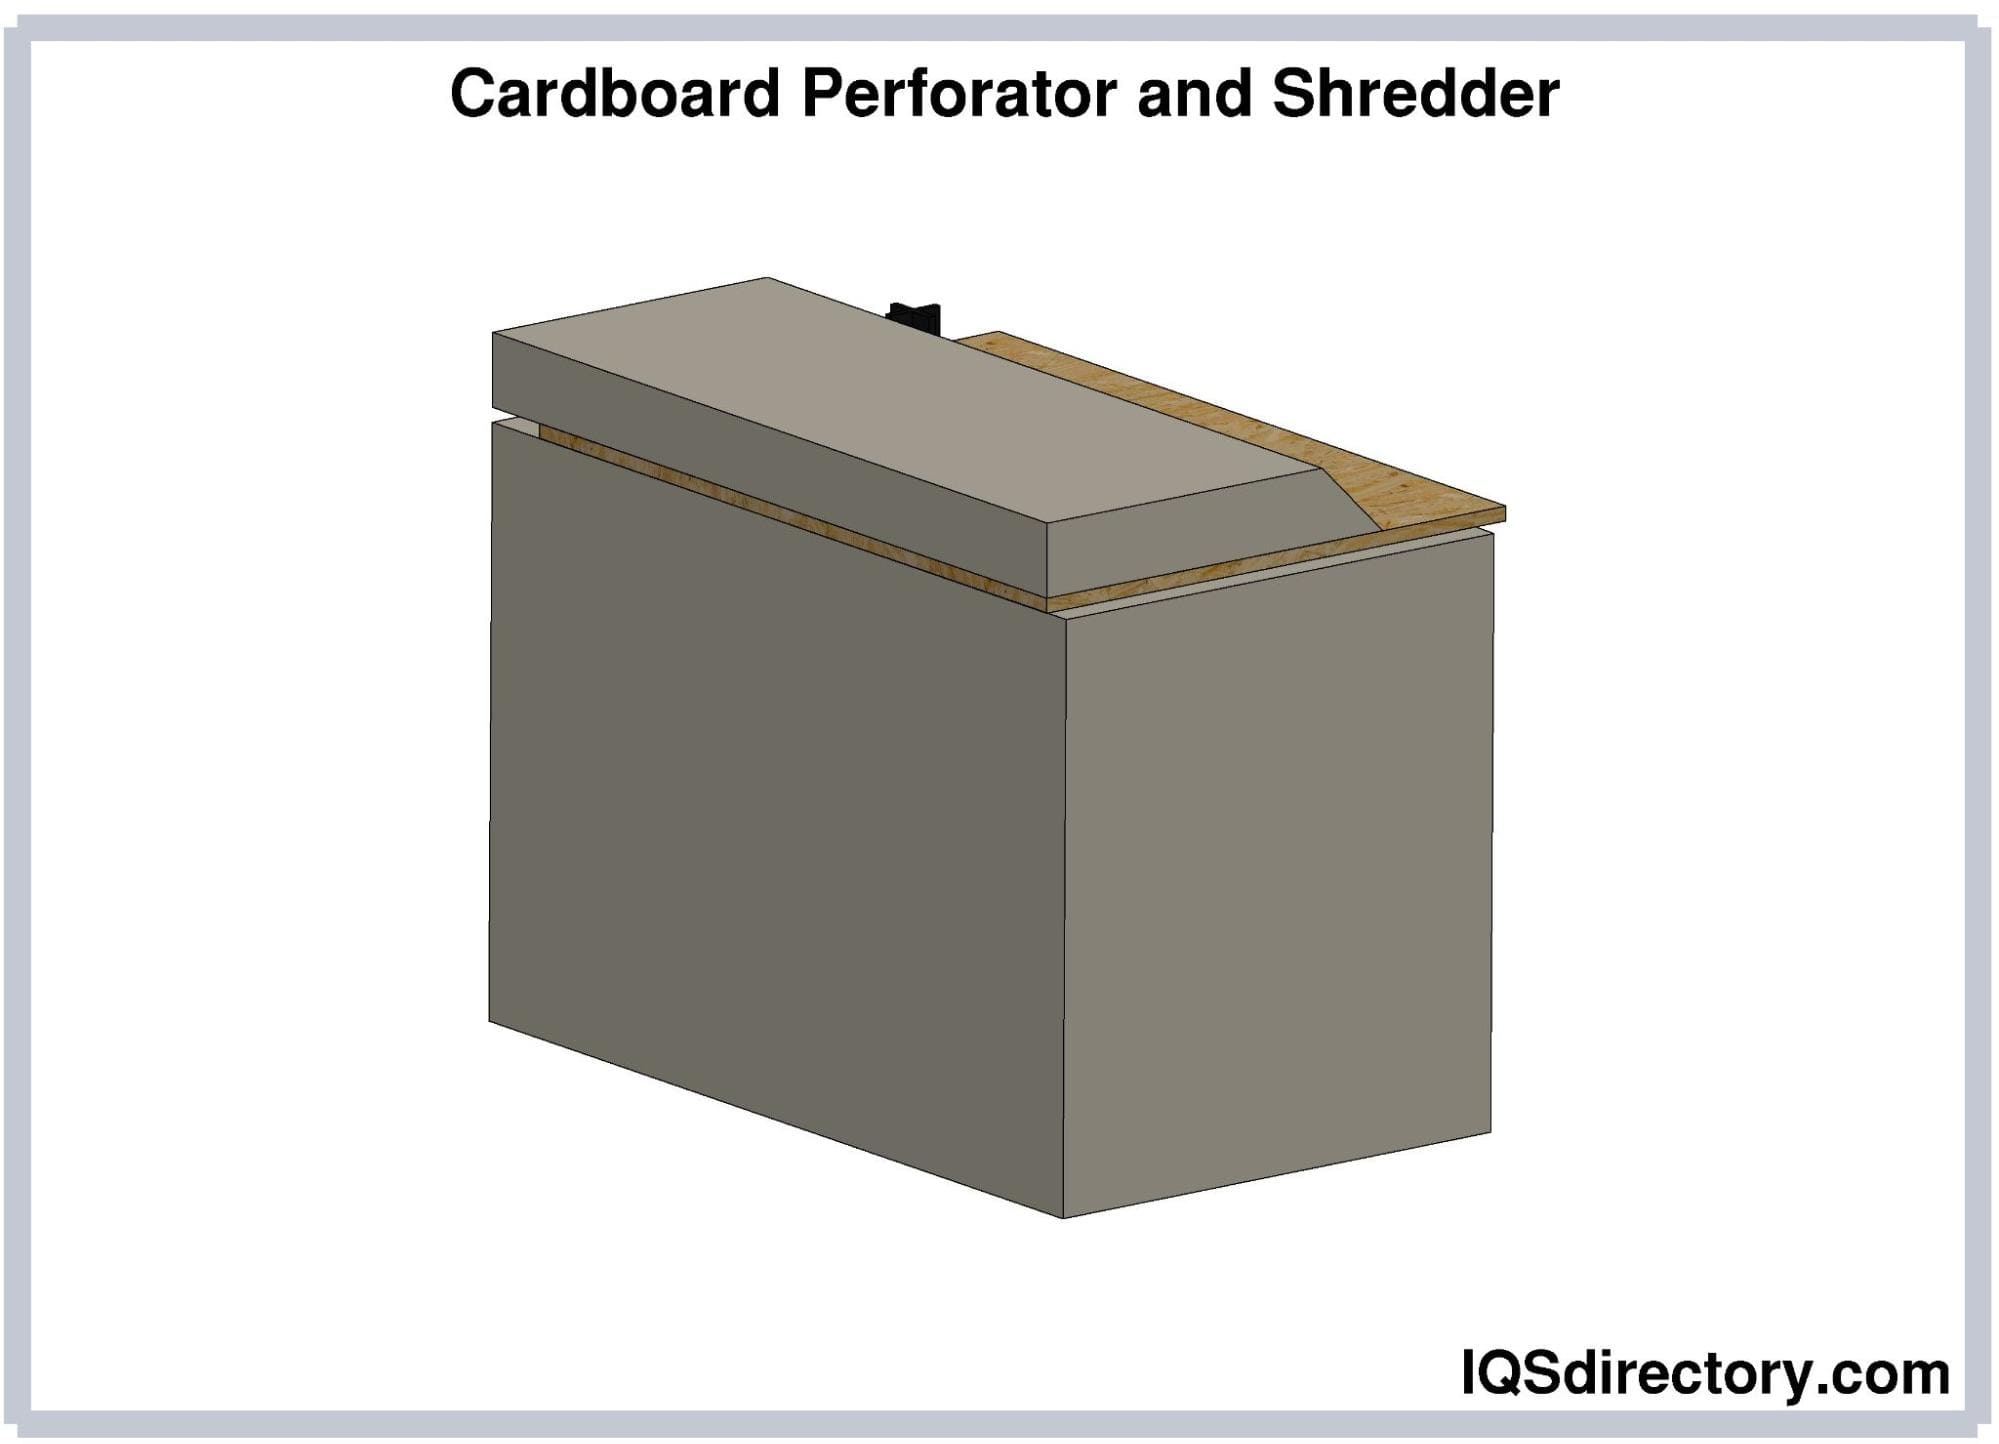 Cardboard Perforator and Shredder